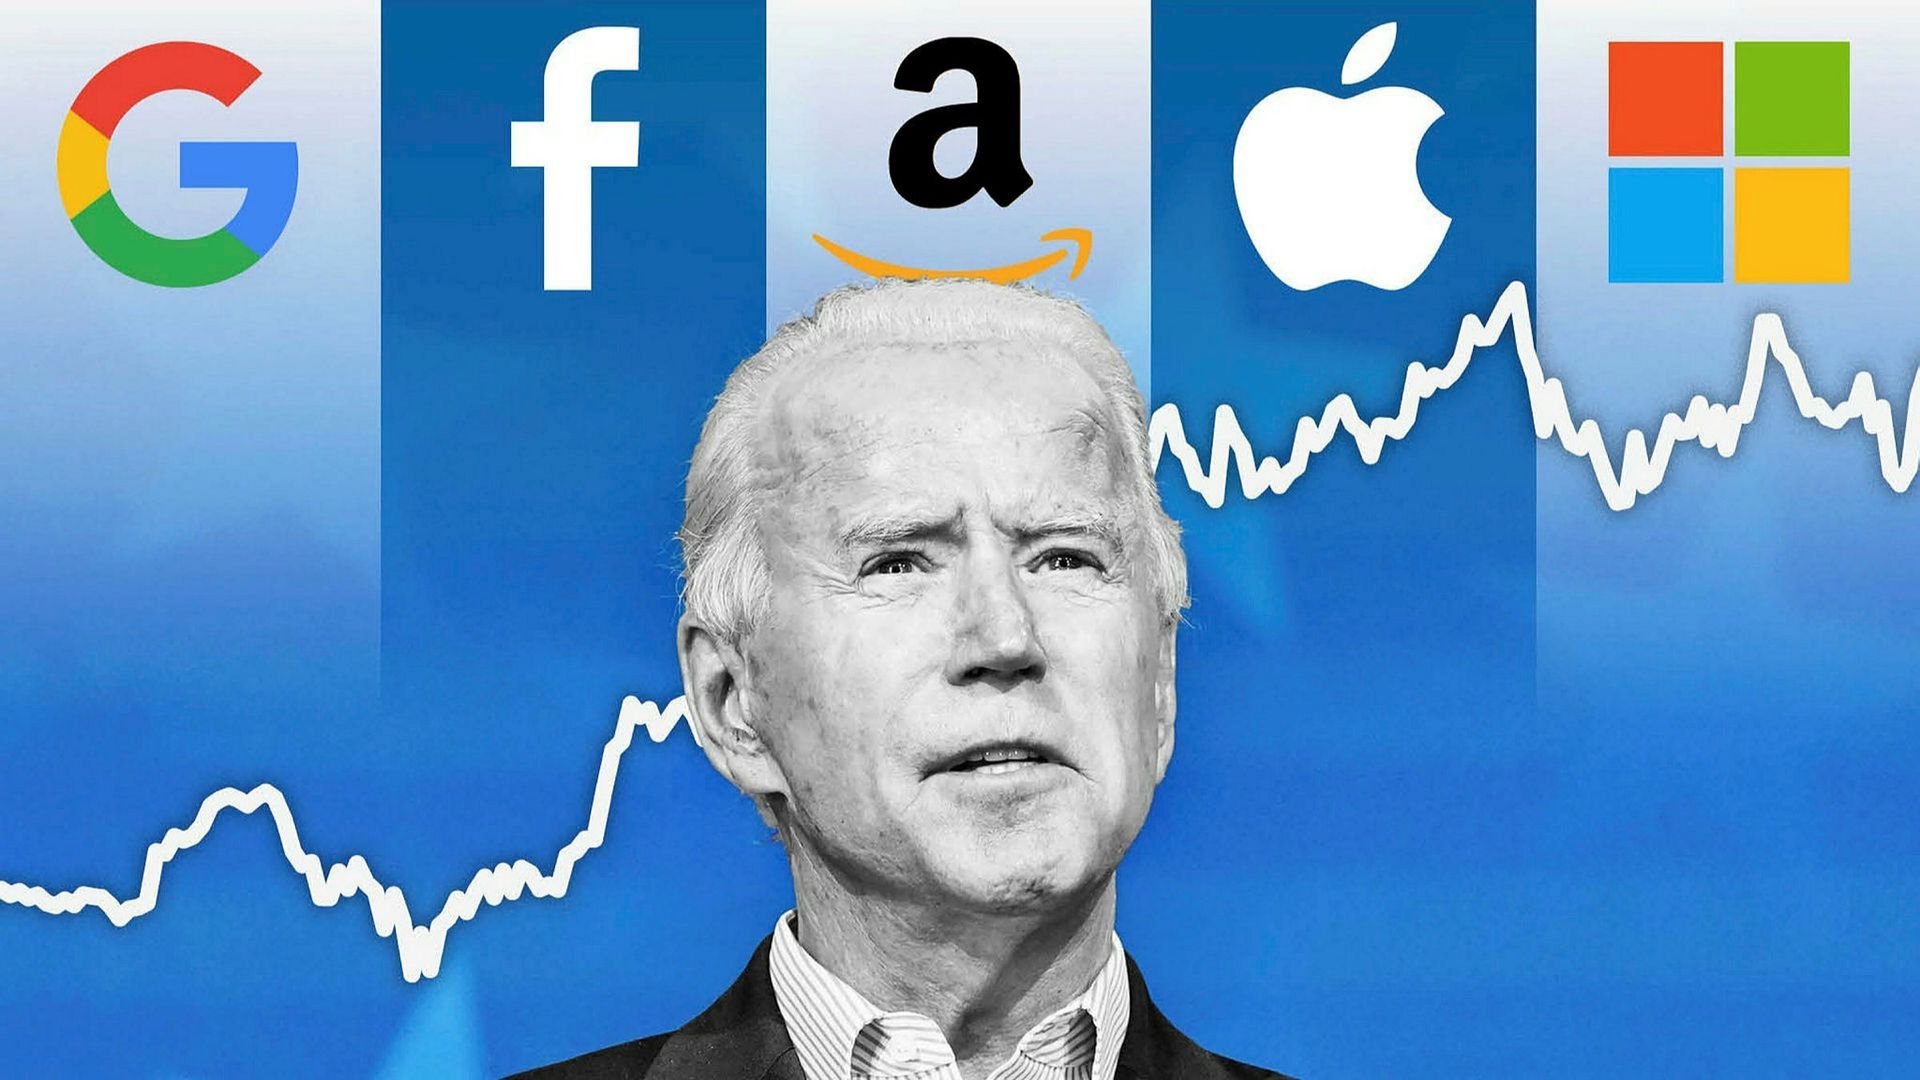 Joe Biden calls tech giants to be transparent